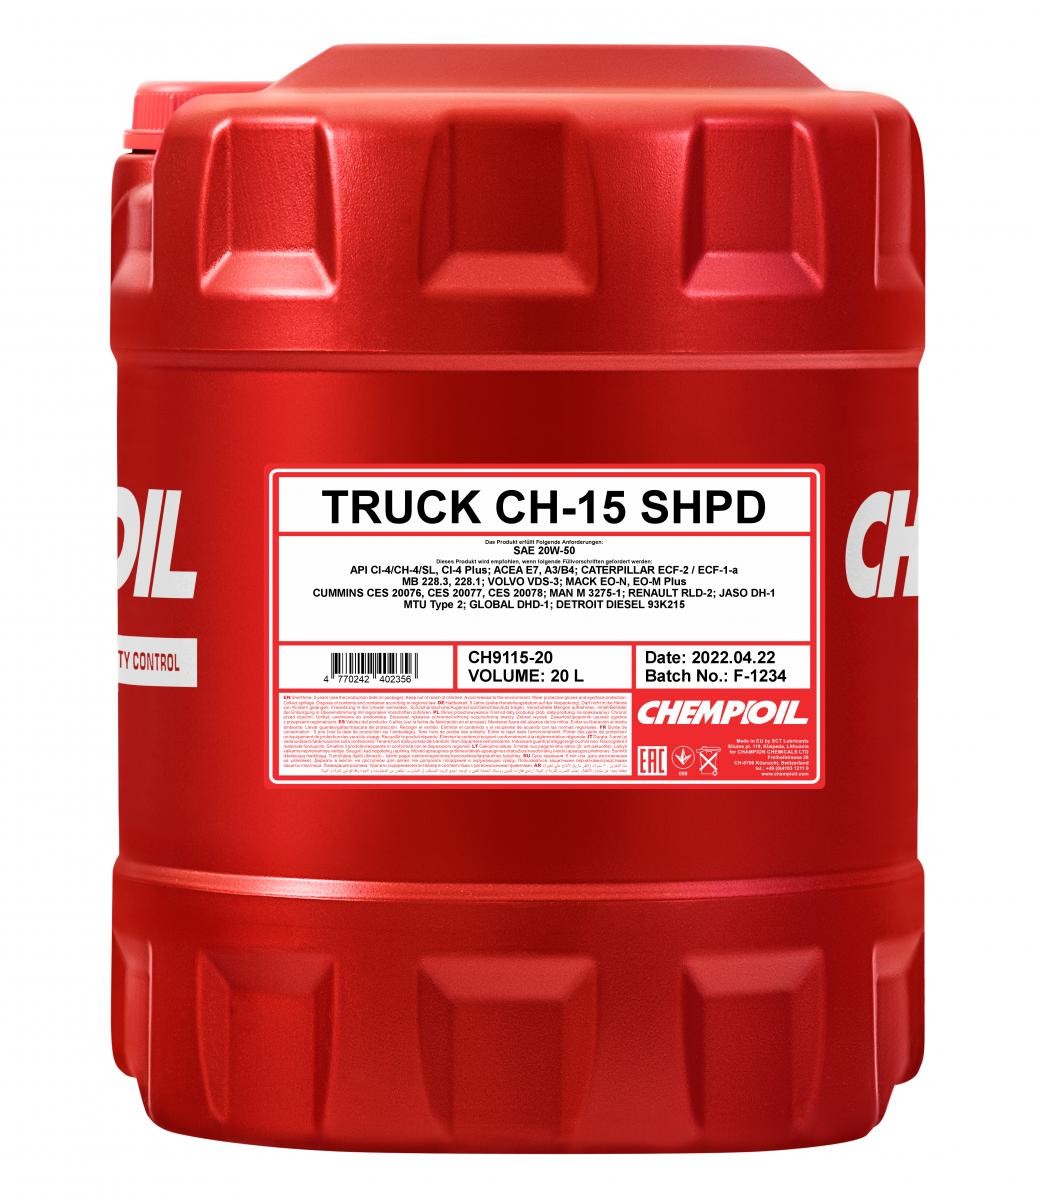 Car oil CHEMPIOIL 20W-50, 20l longlife CH9115-20